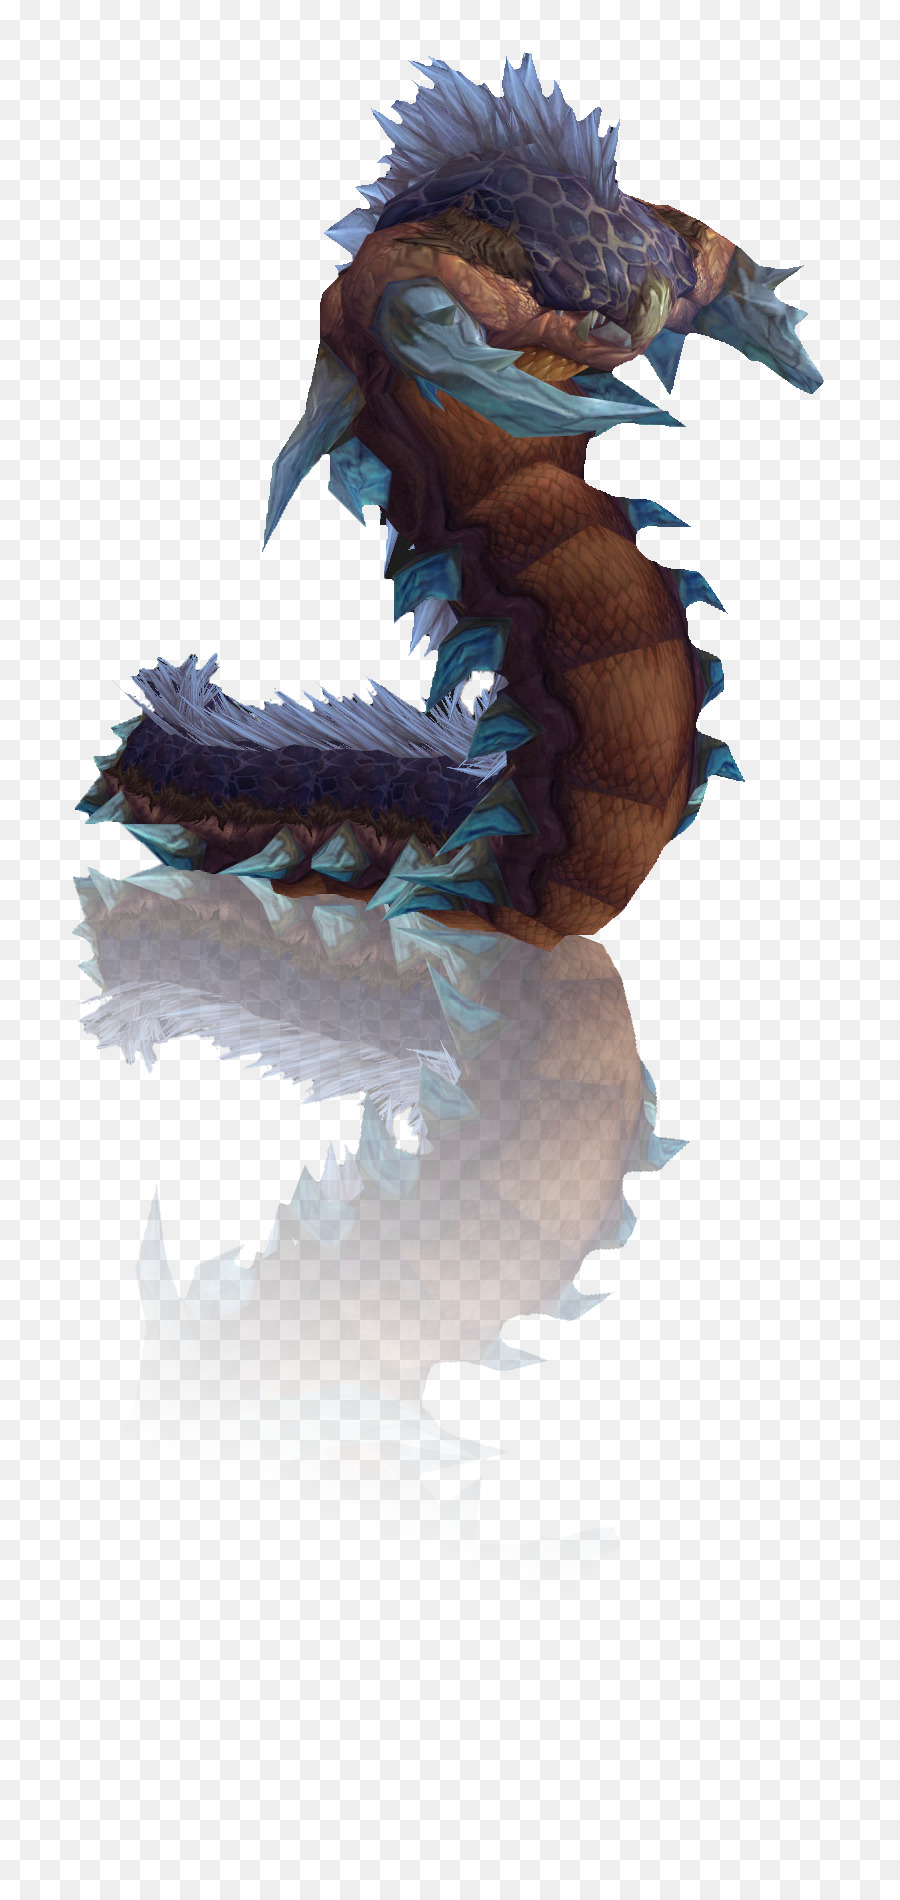 Dragon Organismus - Drachen